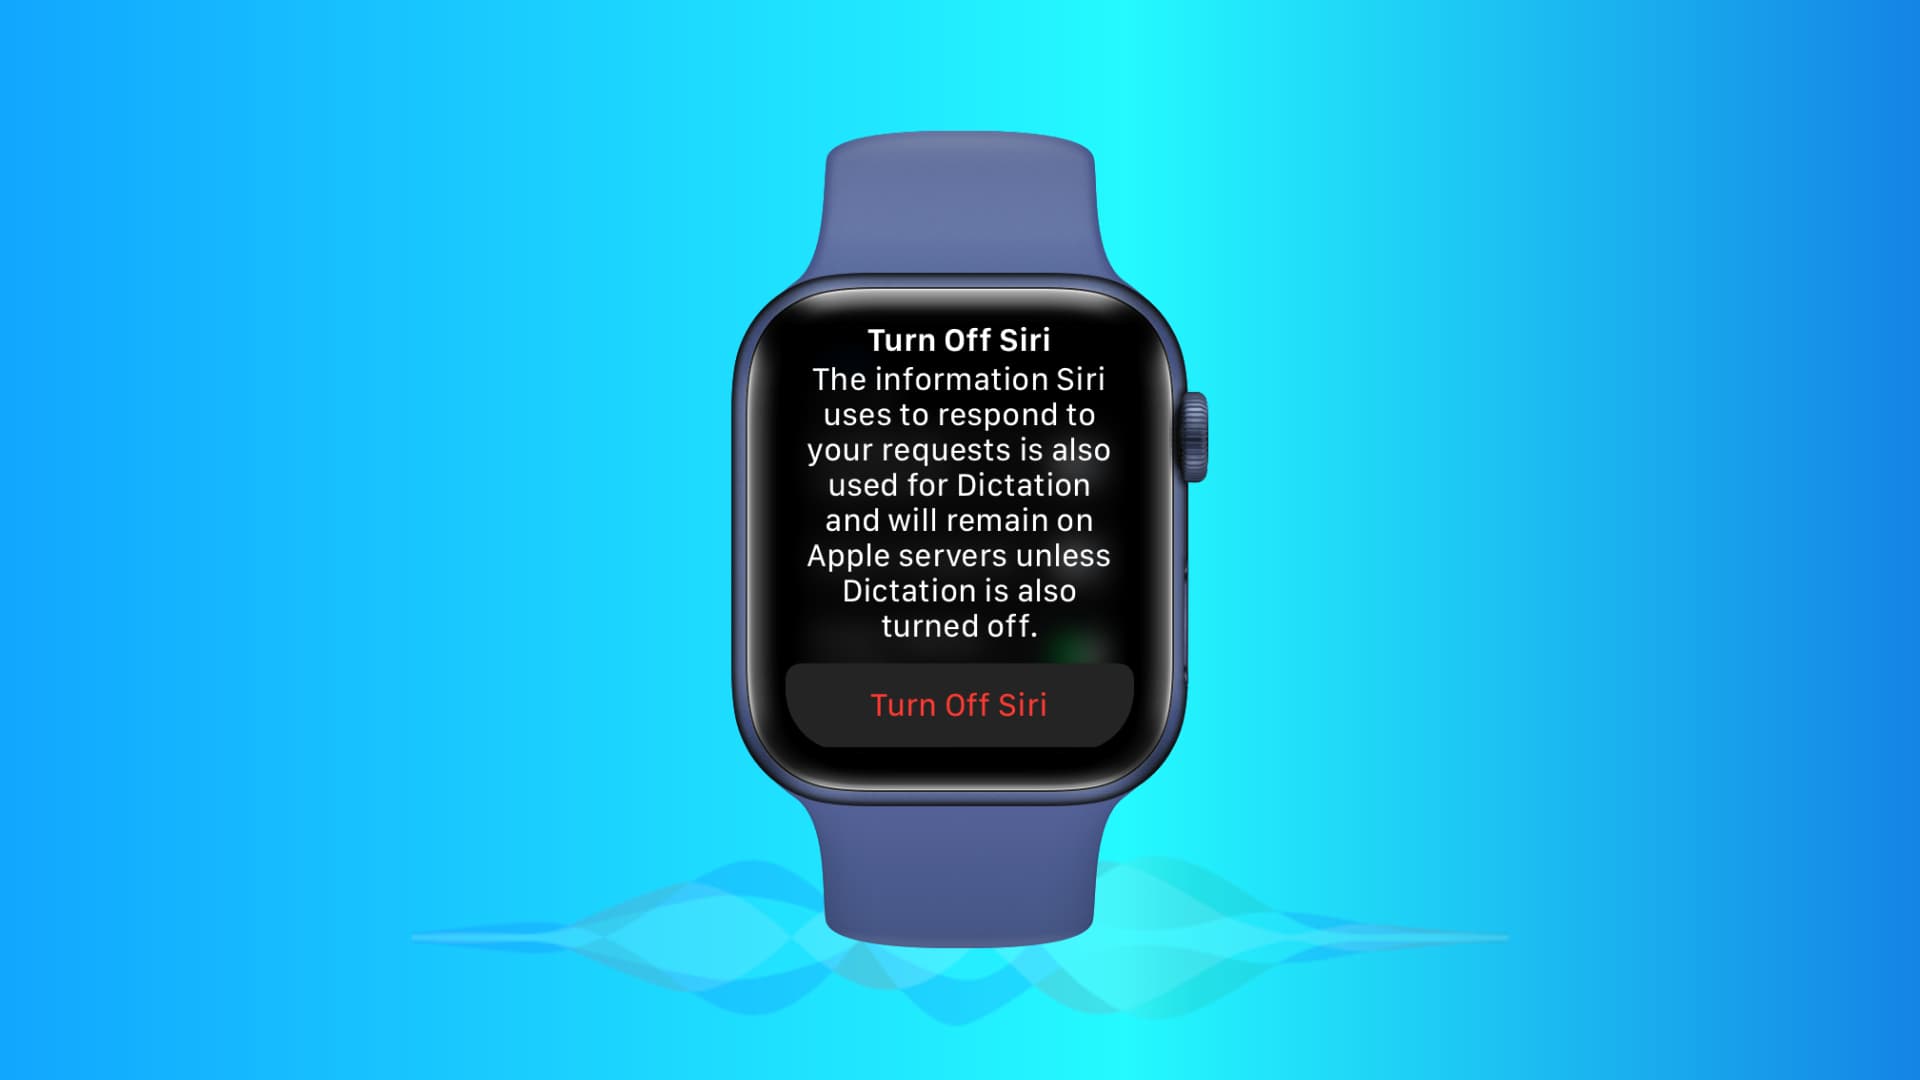 Turn Off Siri on Apple Watch